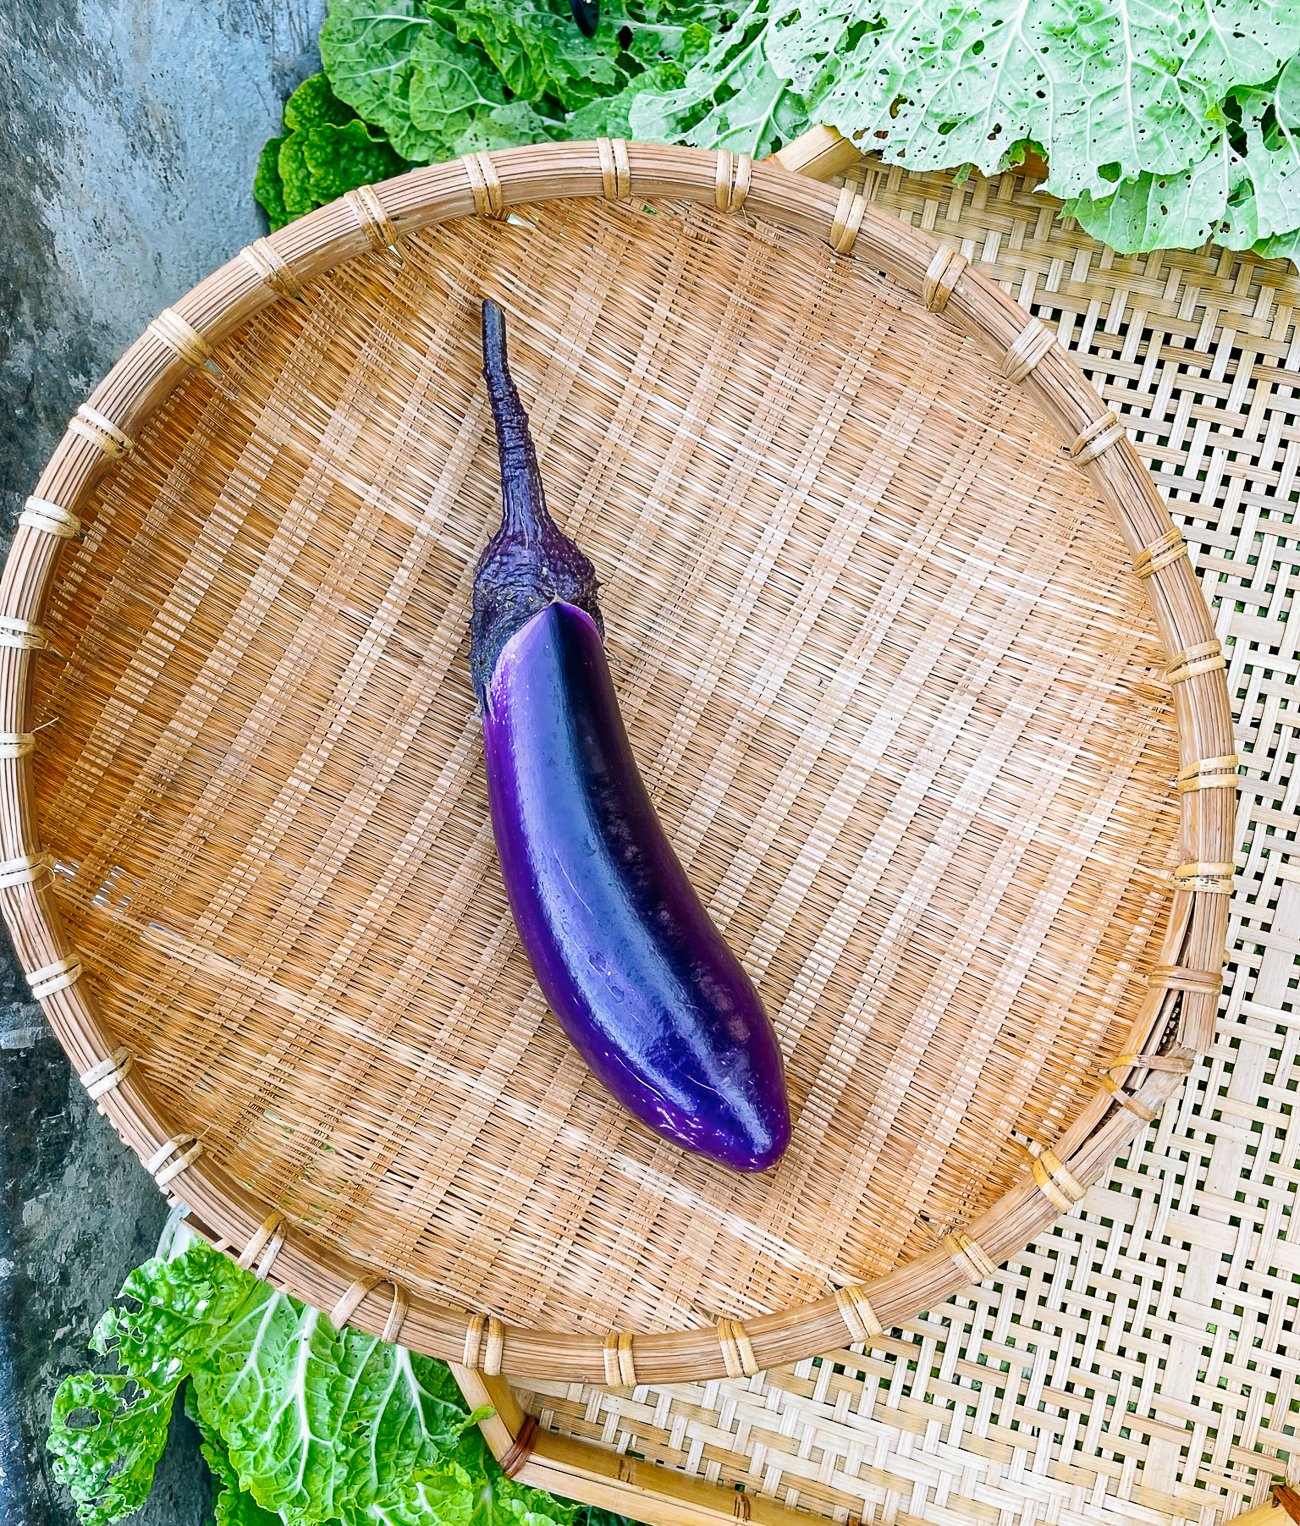 Asian eggplant in basket